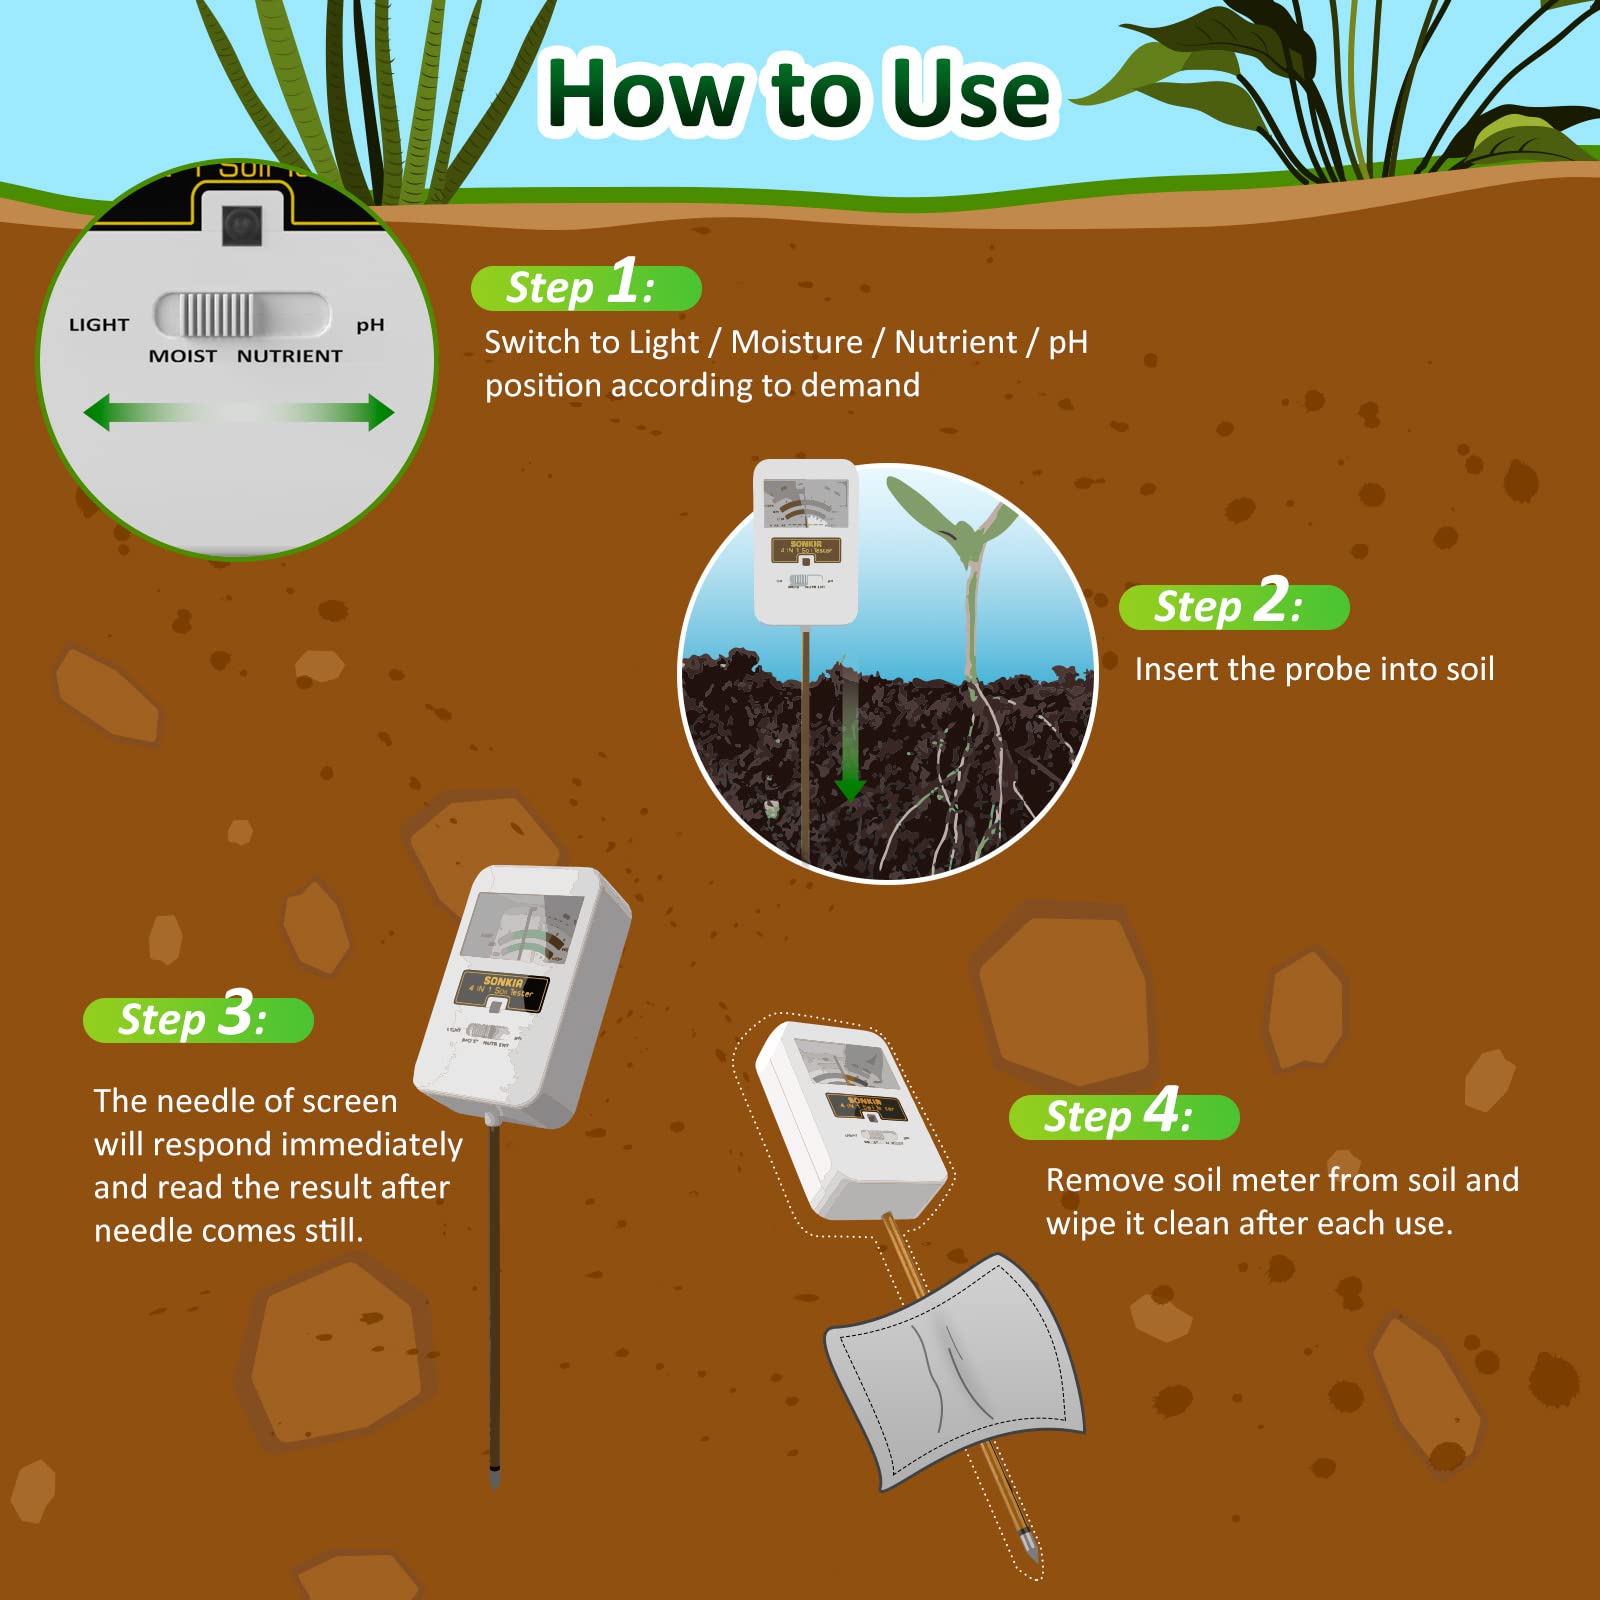 Sonkir Soil Moisture Meter, 4-in-1 Soil Ph Meter, Soil Tester for Nutrients, Moisture, PH and Light, Soil Ph Test Kits for Plant, Great for Garden, Lawn, Indoor & Outdoor Use (No Battery Required)